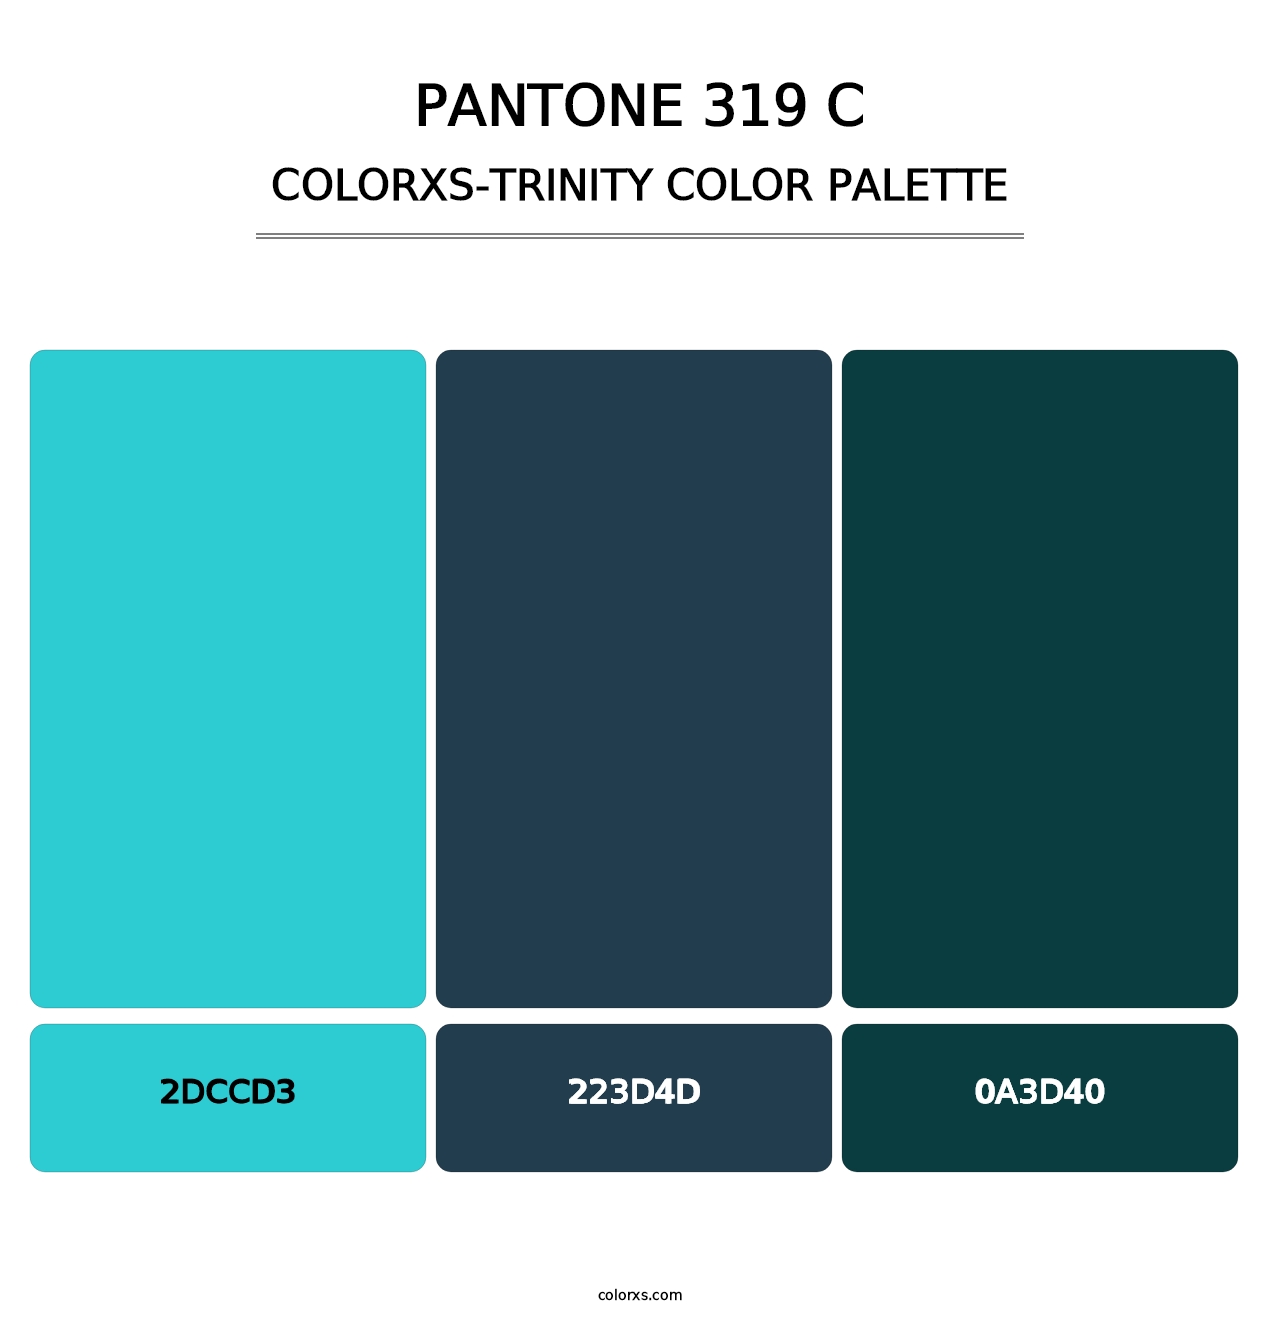 PANTONE 319 C - Colorxs Trinity Palette